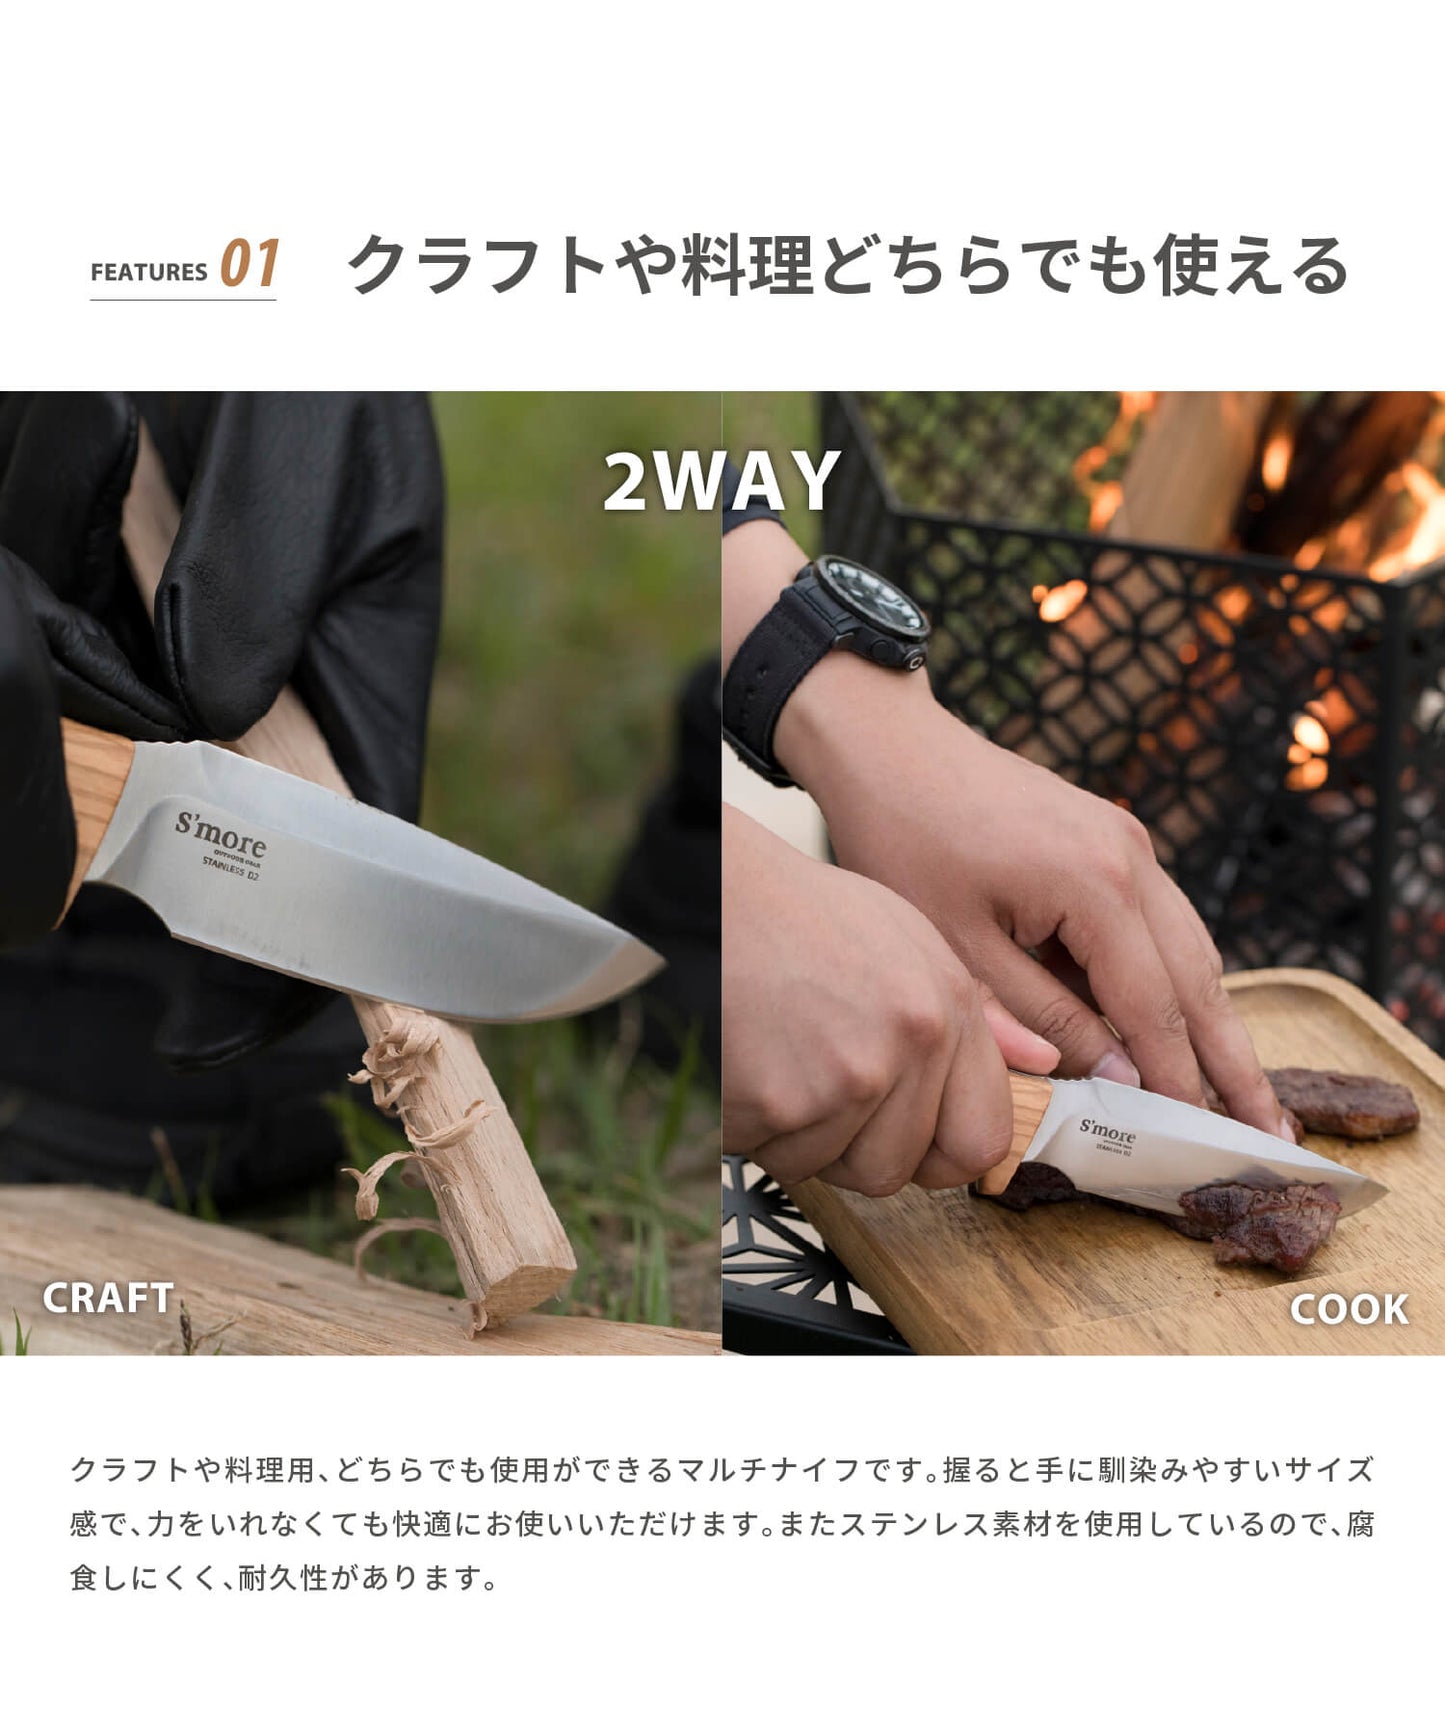 New!!【 Copault knife 】 コポーナイフ ナイフ